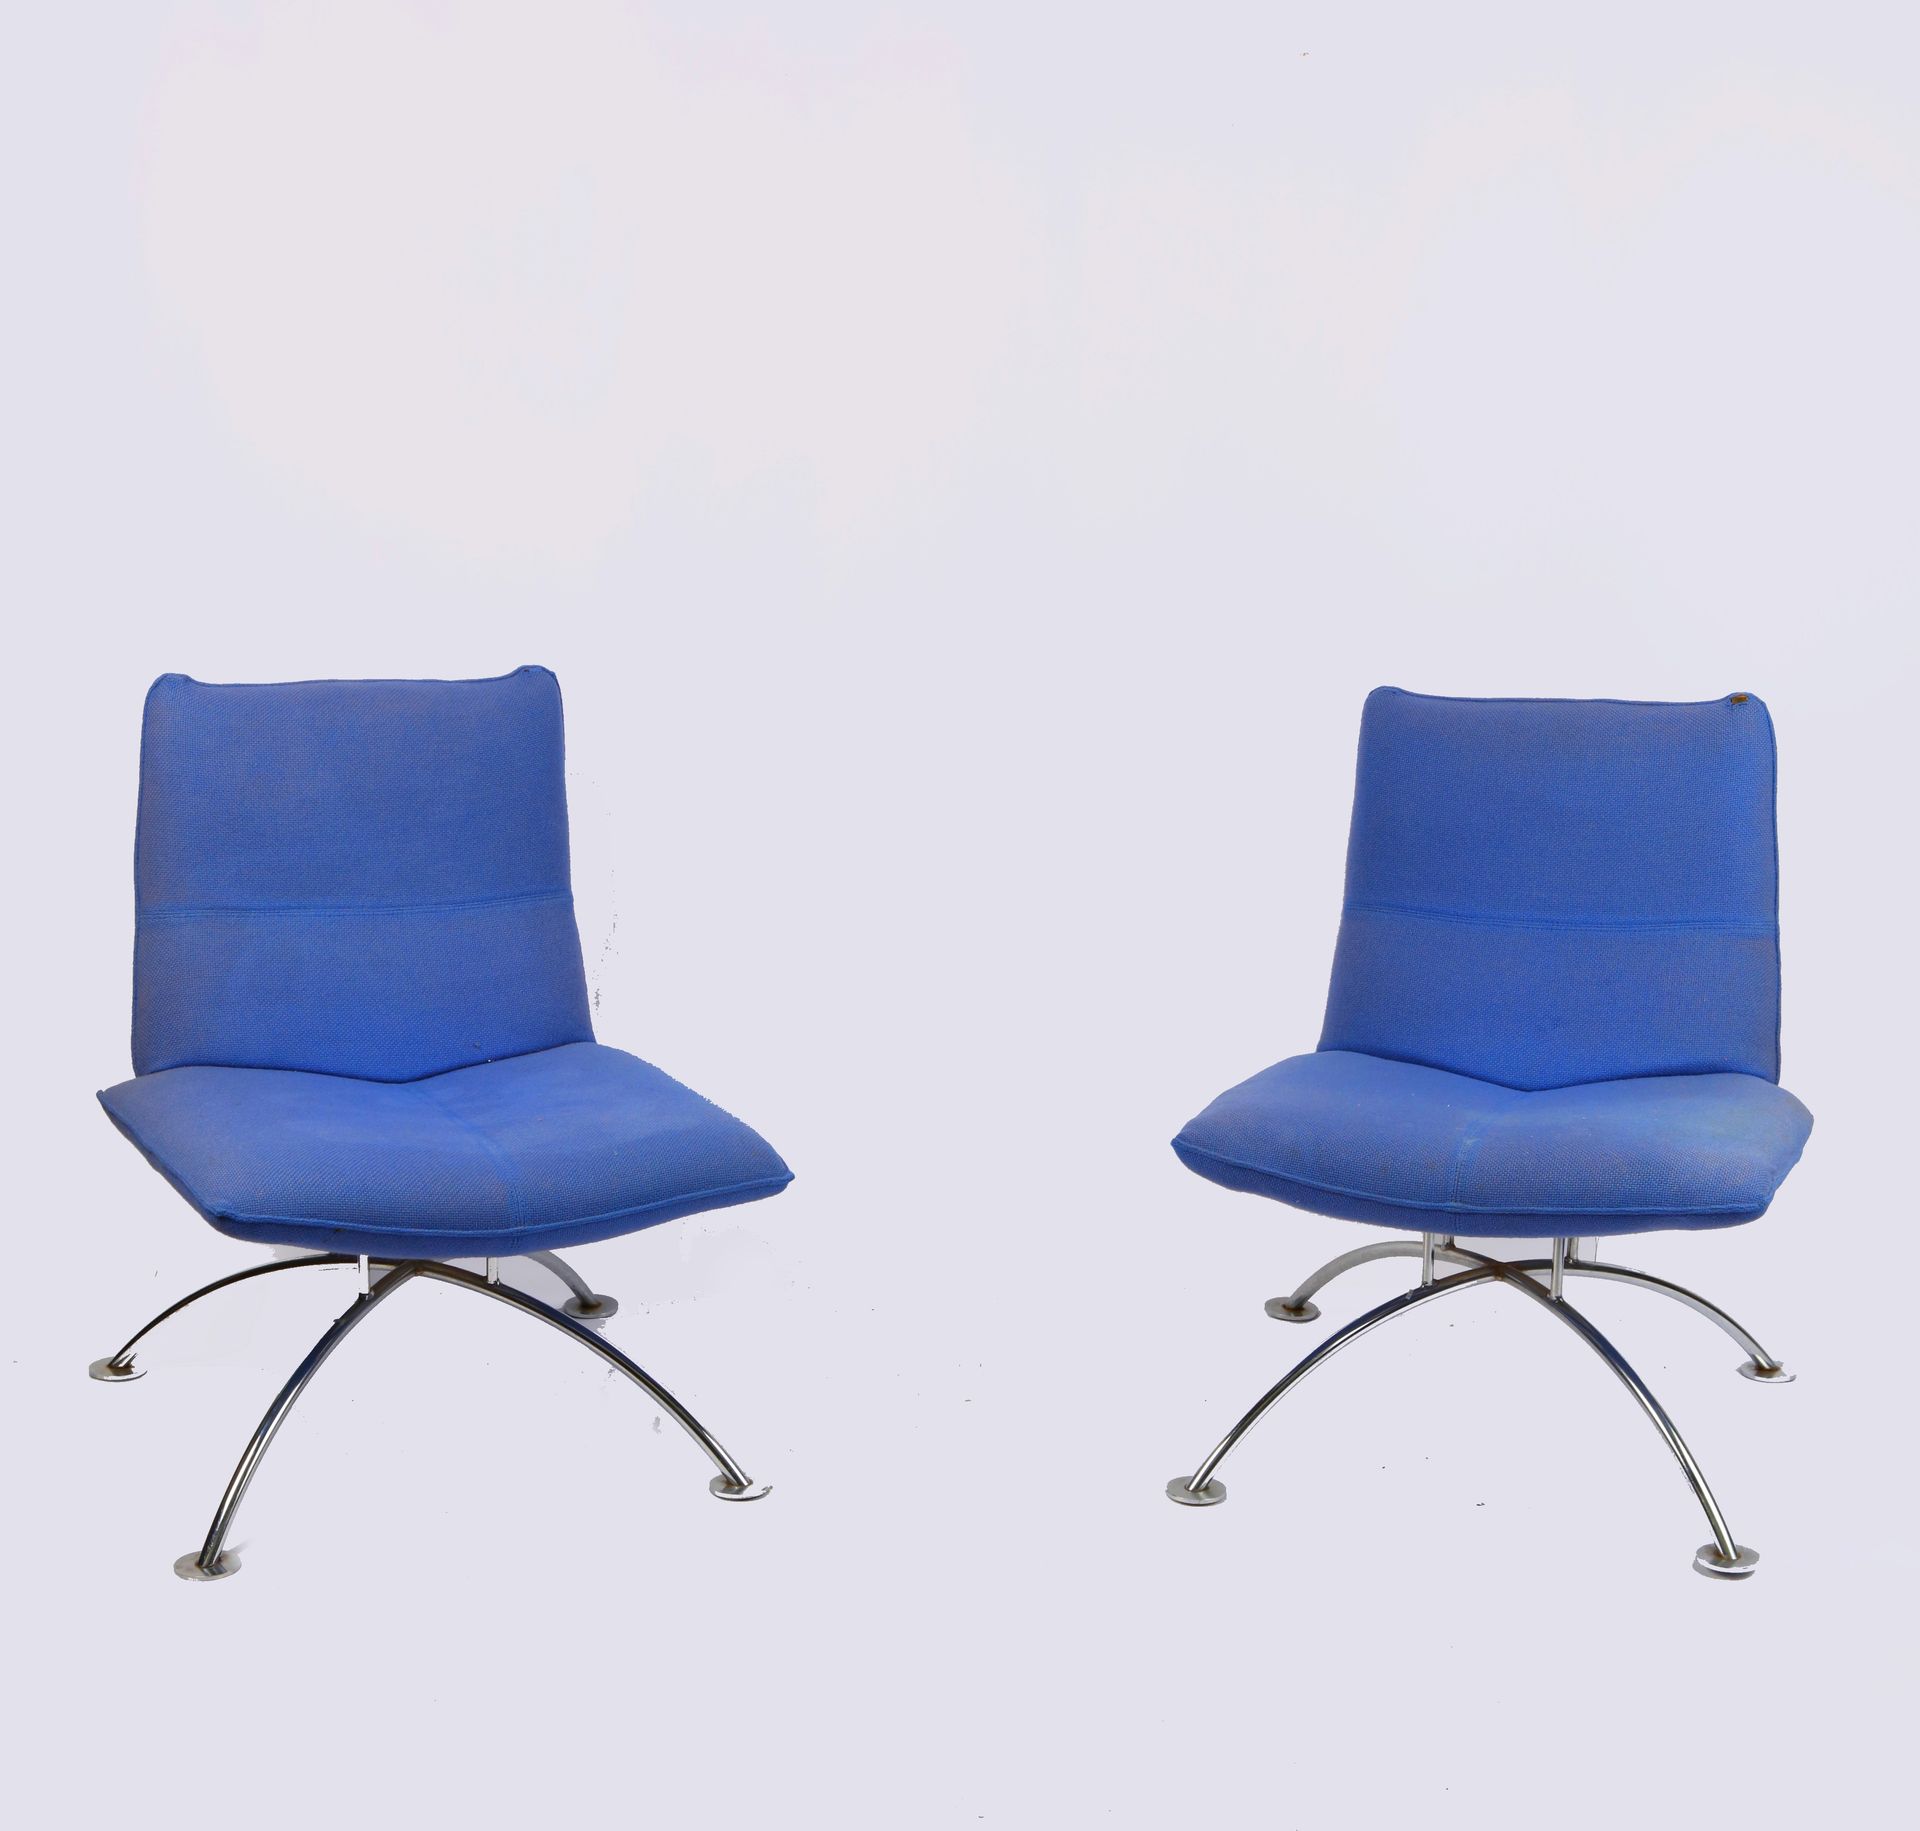 Null BERTHET J.L, 一对扶手椅 "Chauffeuses", 型号Delta.国际家具出版商，蓝色织物（可见污渍）。镀铬钢腿。66X64X84